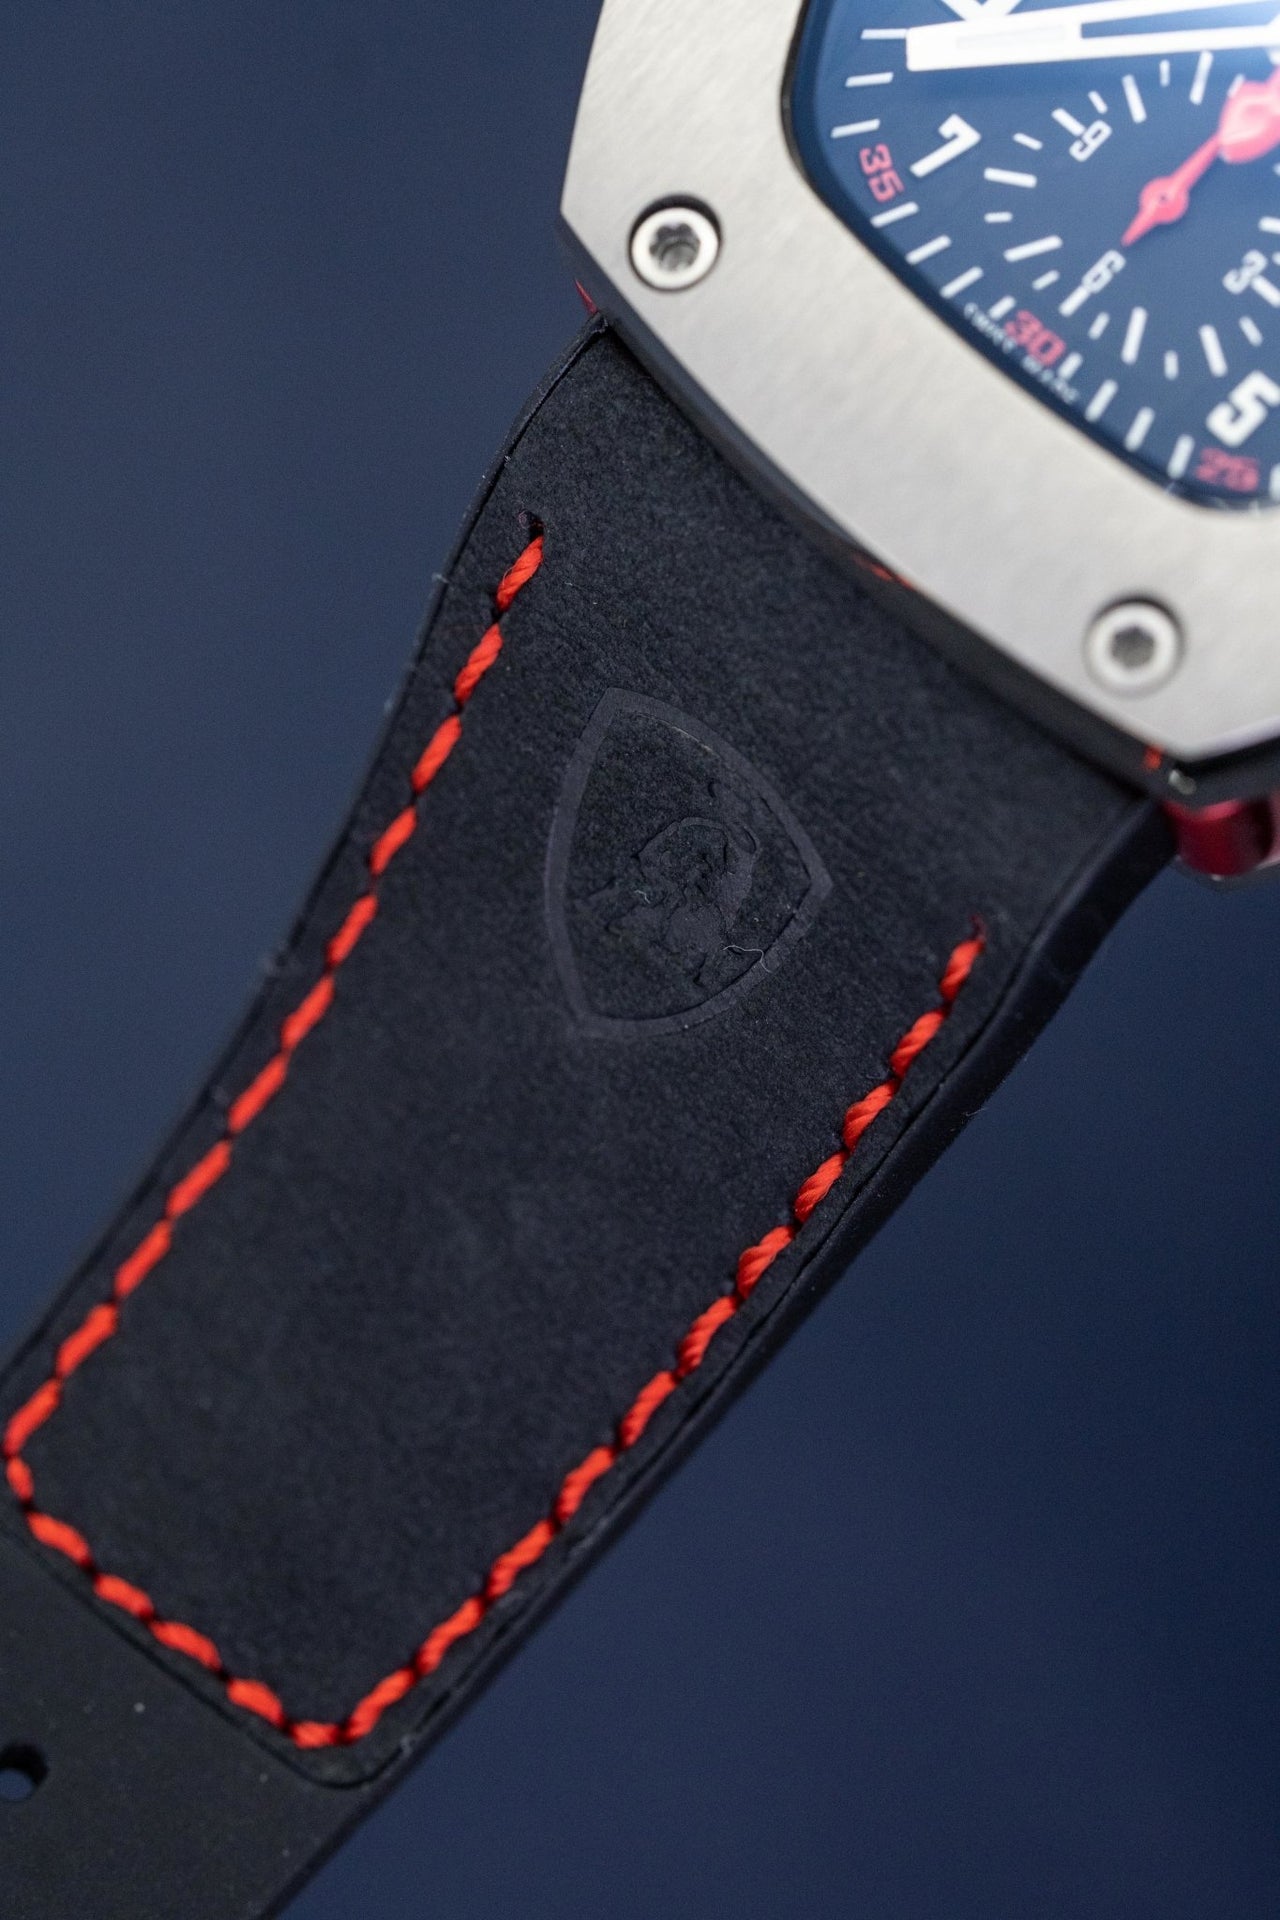 Tonino Lamborghini Spyderleggero Chronograph Day Date Red - Watches & Crystals